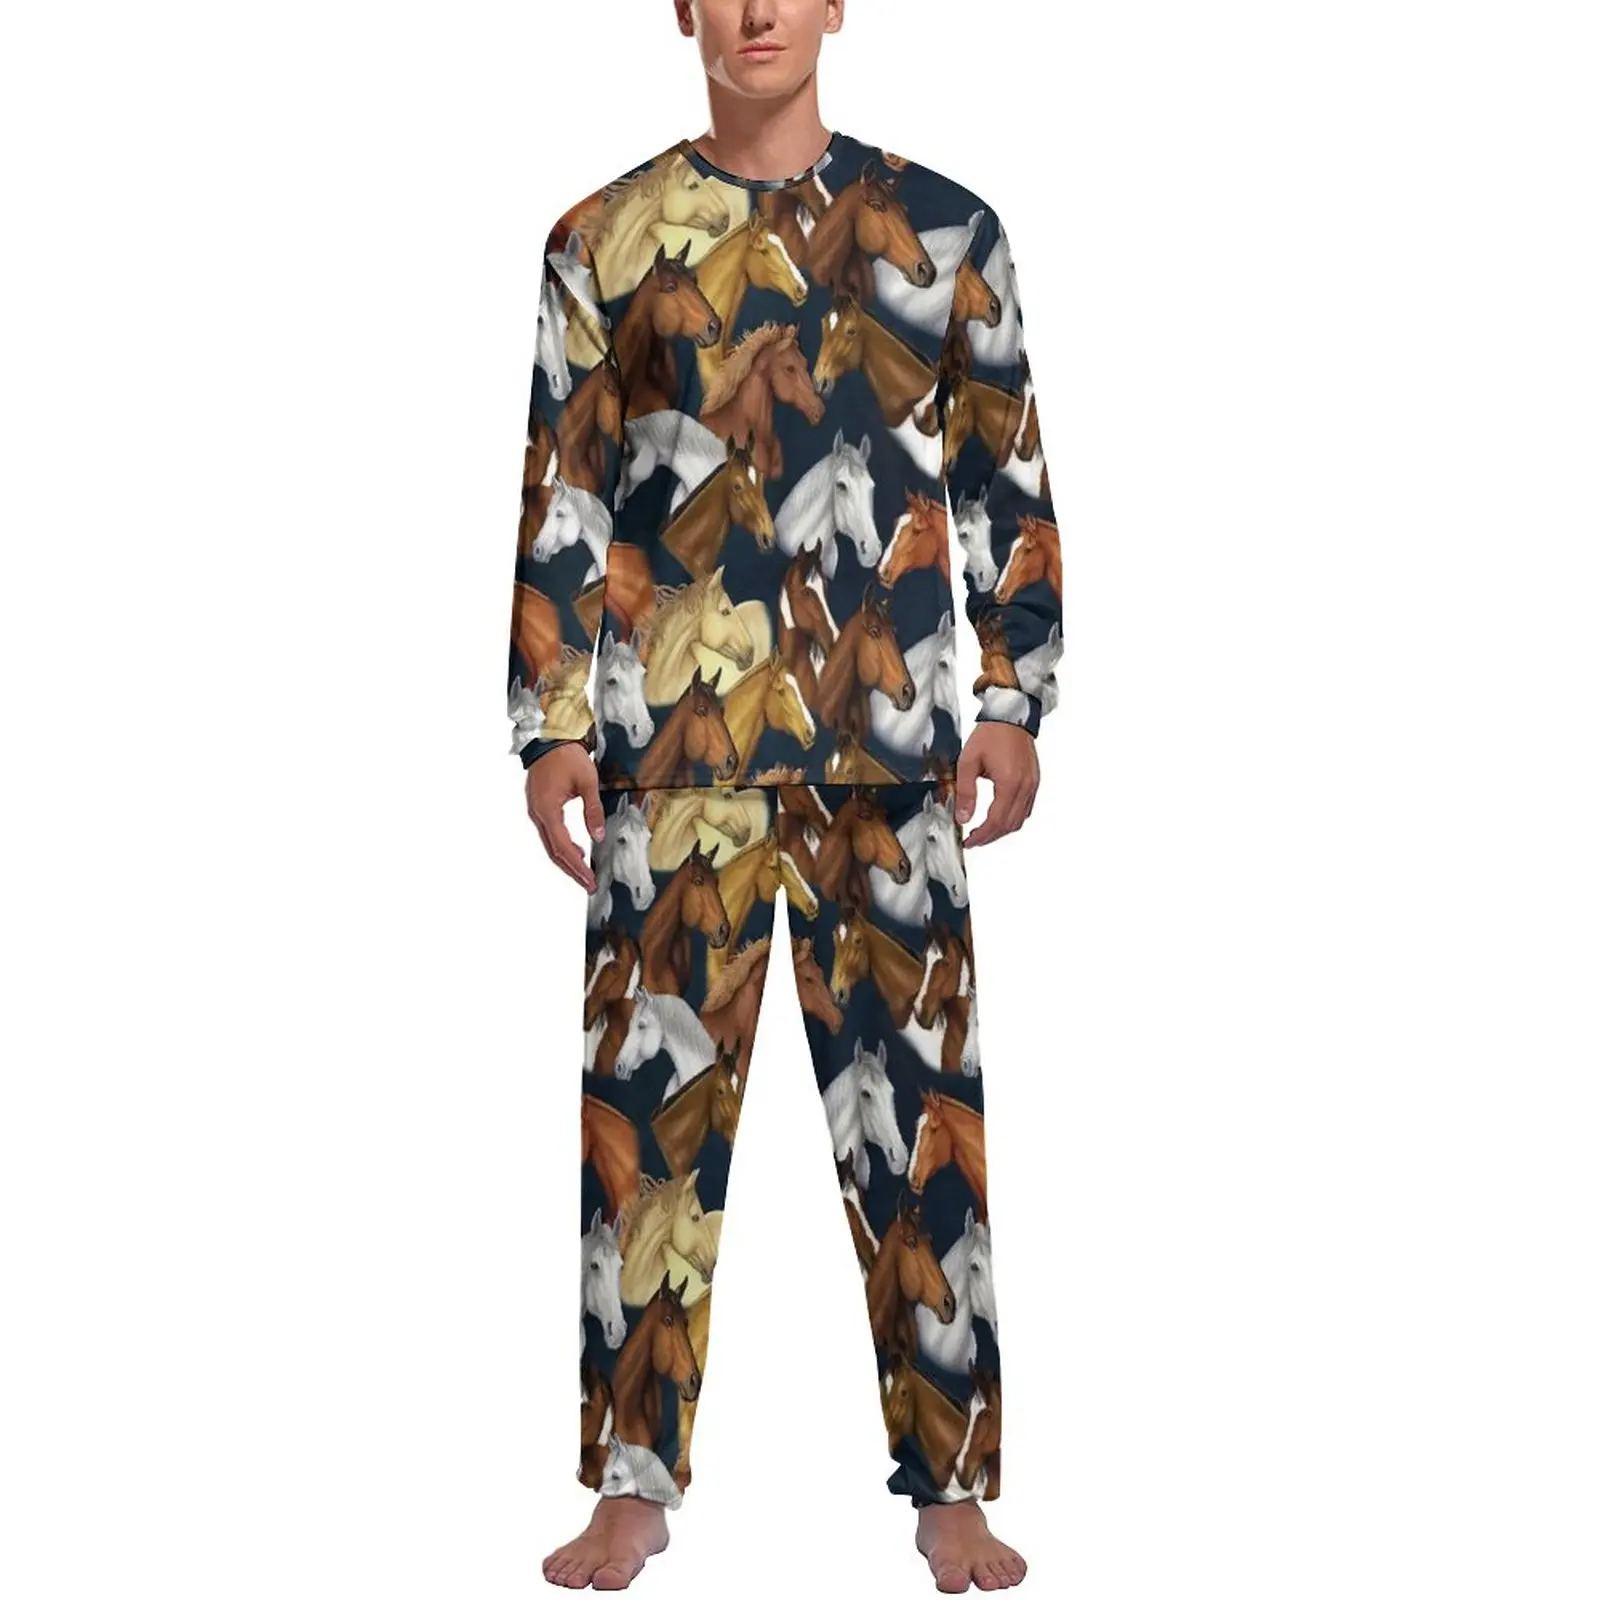 Cool Hourse Pajamas Wild Animal Print Men Long Sleeve Elegant Pajama Sets 2 Pieces Sleep Autumn Graphic Nightwear Gift Idea